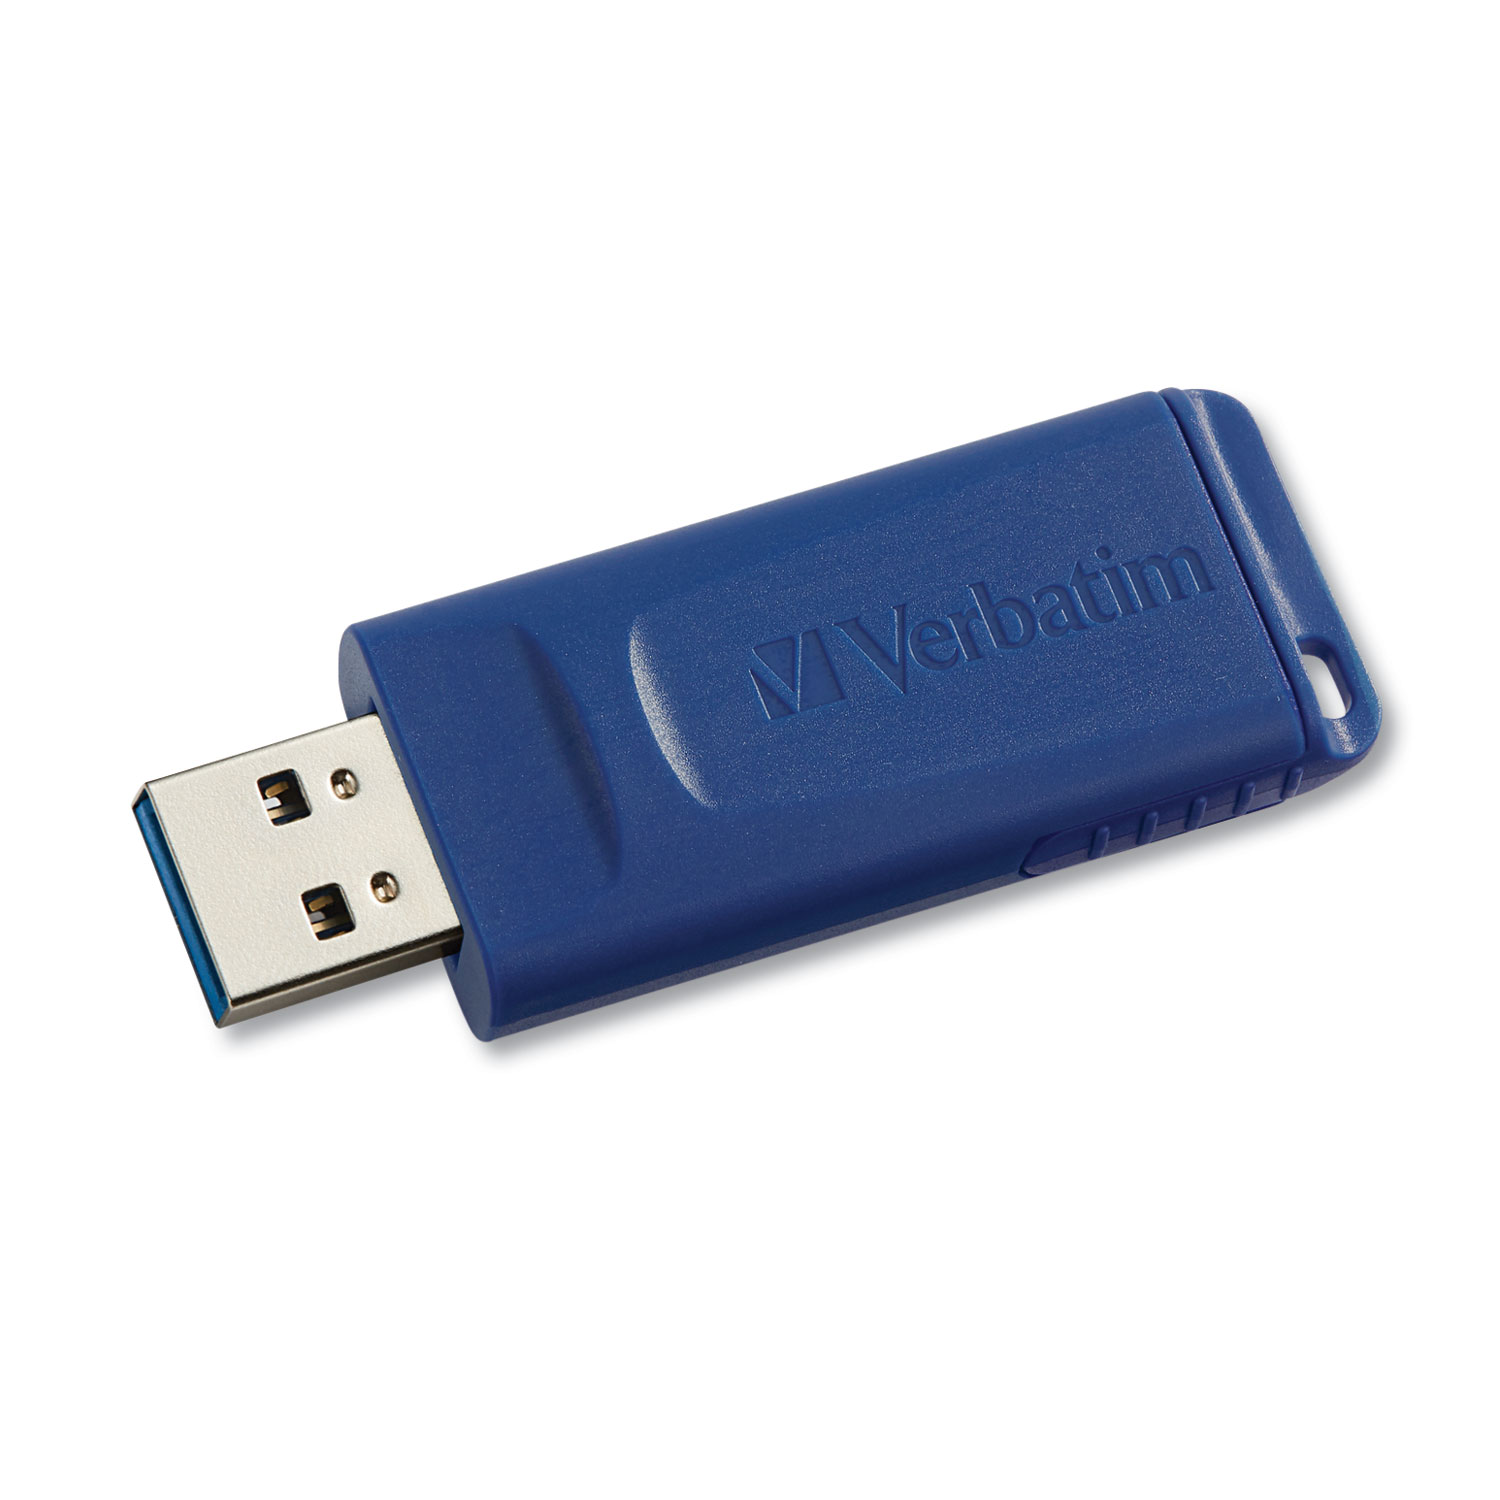 Verbatim Smart 32GB USB 2.0 Flash Drive Model 97408 - image 2 of 4